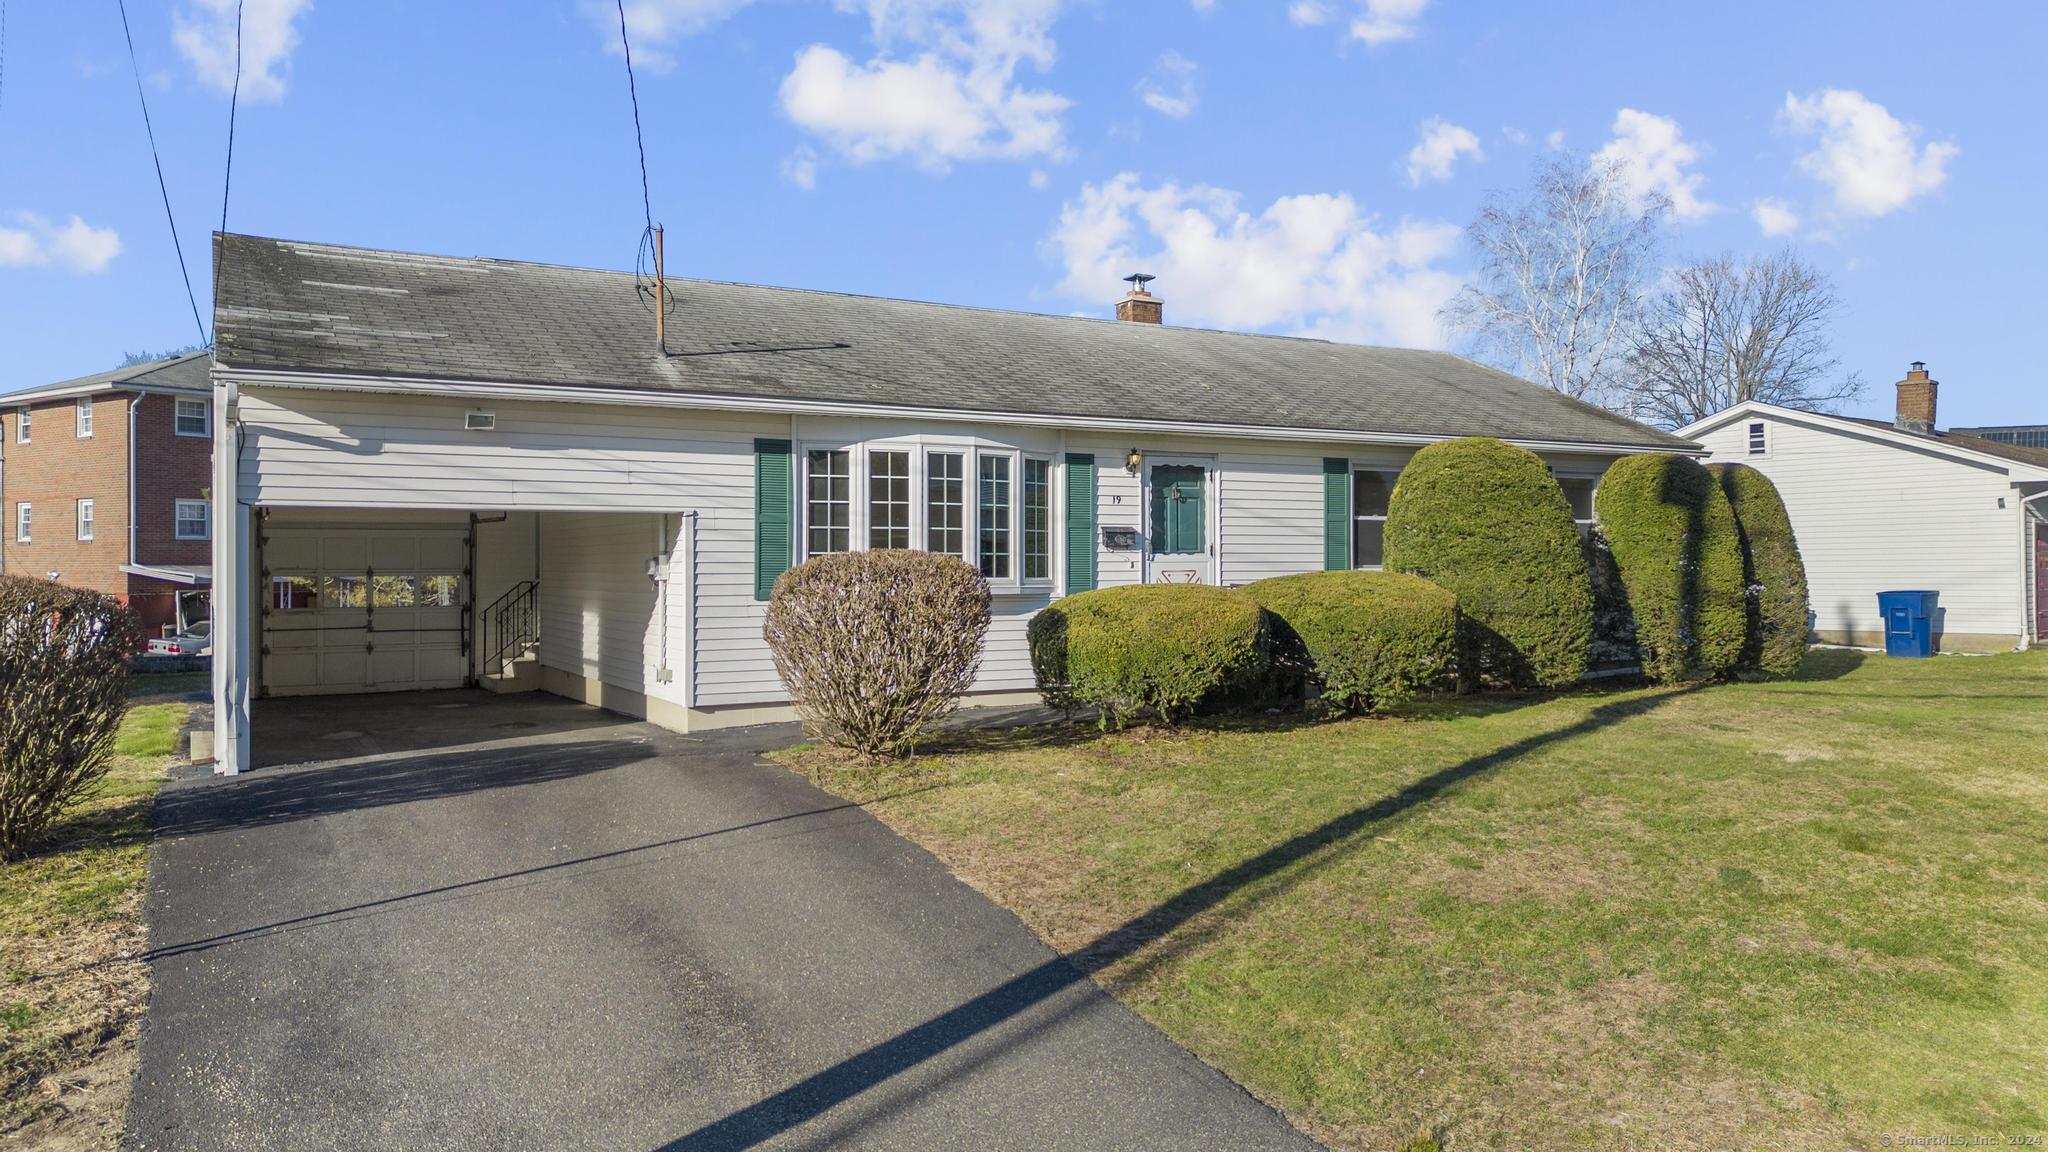 Property for Sale at 19 Rosengarten Drive, Waterbury, Connecticut - Bedrooms: 3 
Bathrooms: 2 
Rooms: 5  - $293,500